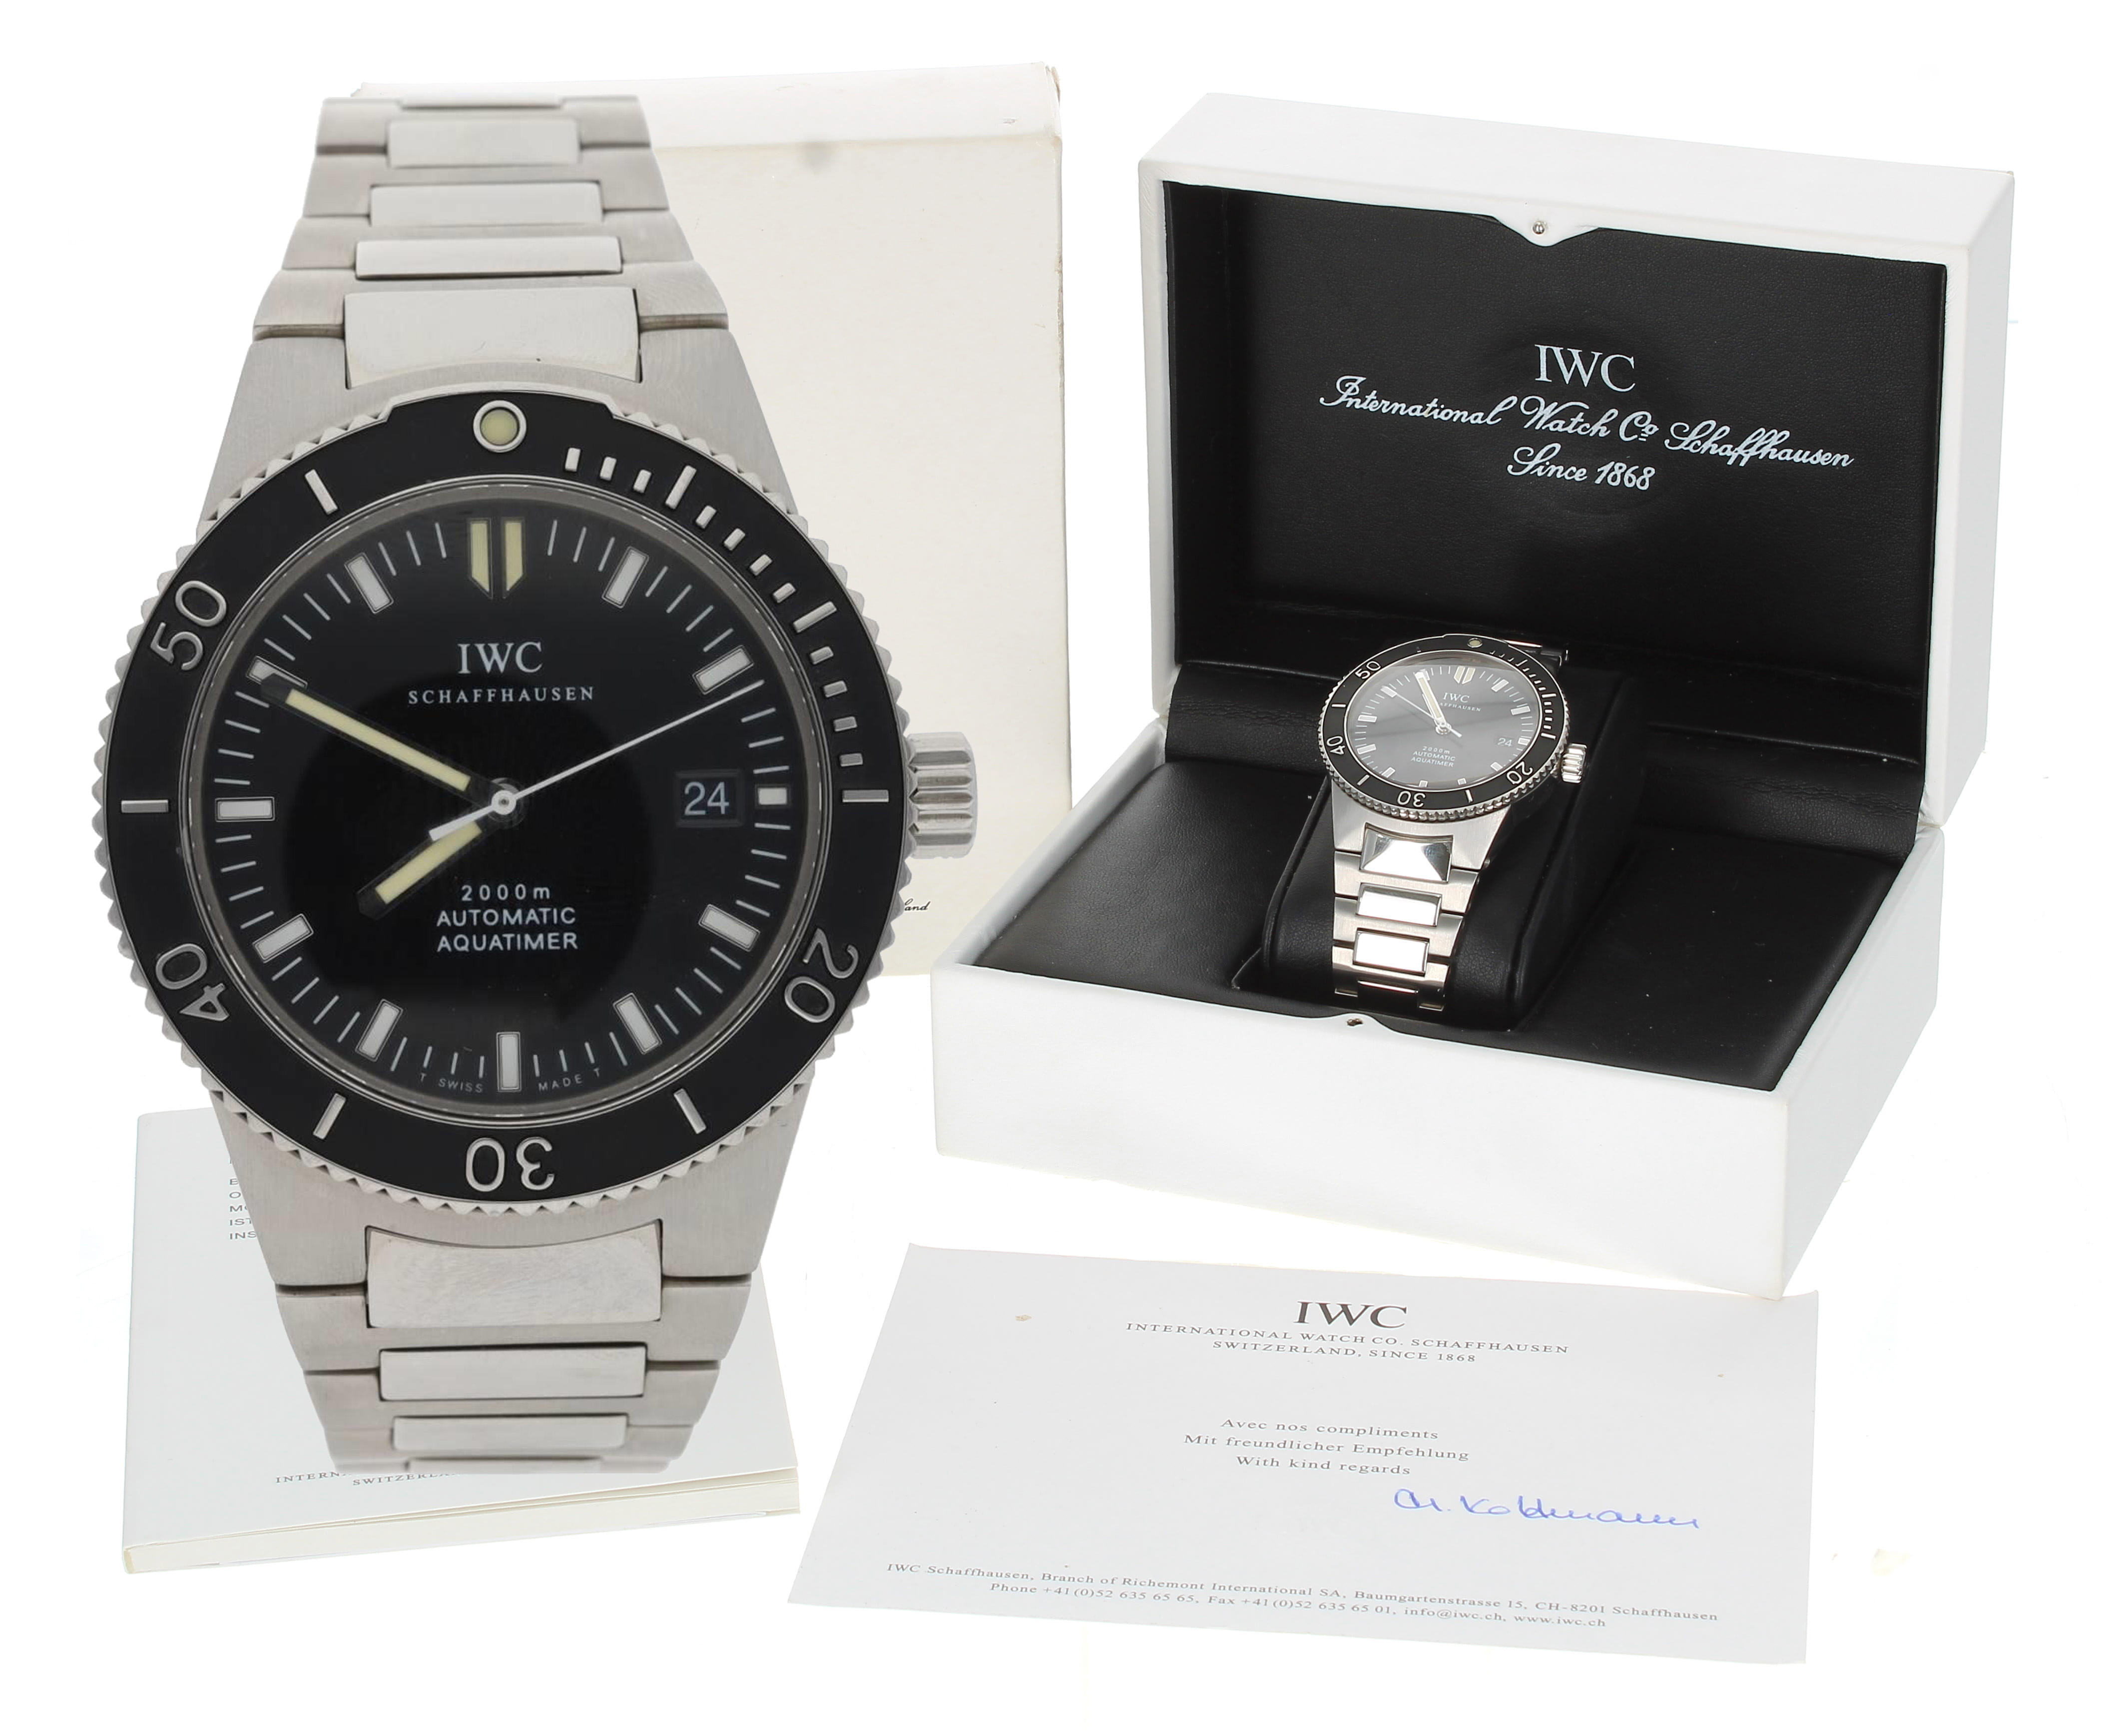 IWC (International Watch Company) Aquatimer GST 2000M automatic stainless steel gentleman's